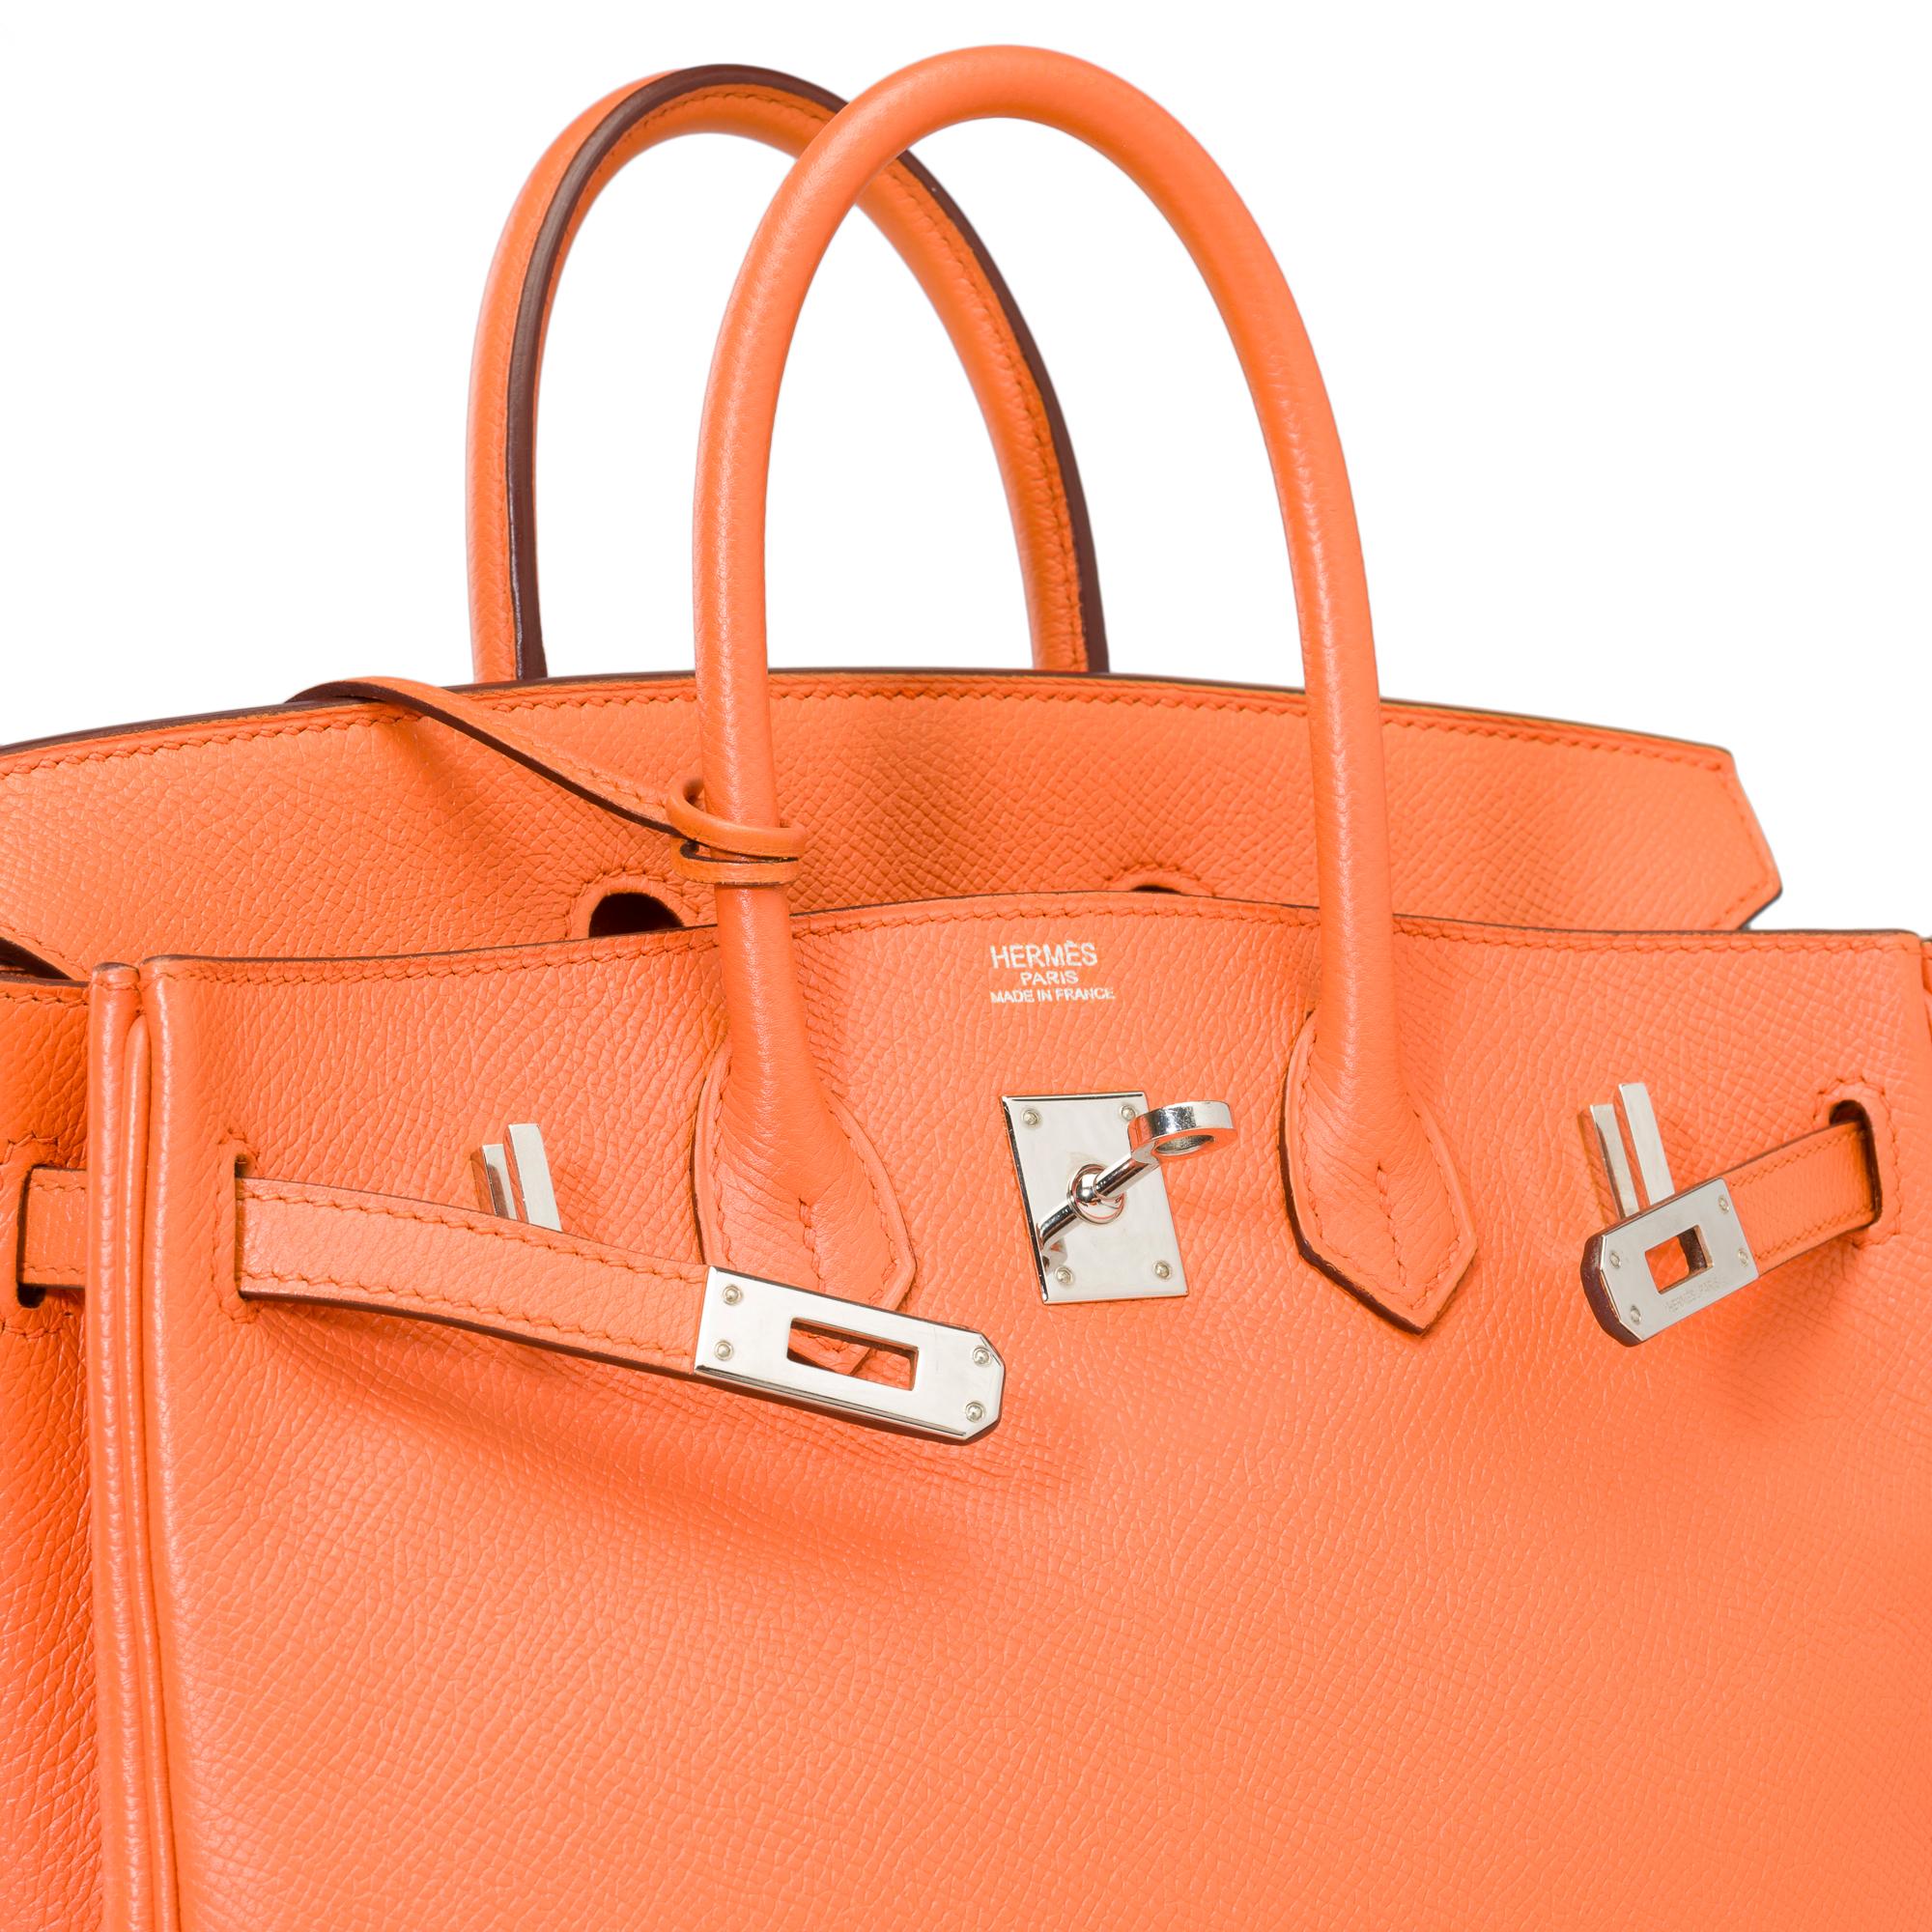 Bright Hermes Birkin 25cm handbag in Orange Epsom calf leather, SHW For Sale 4